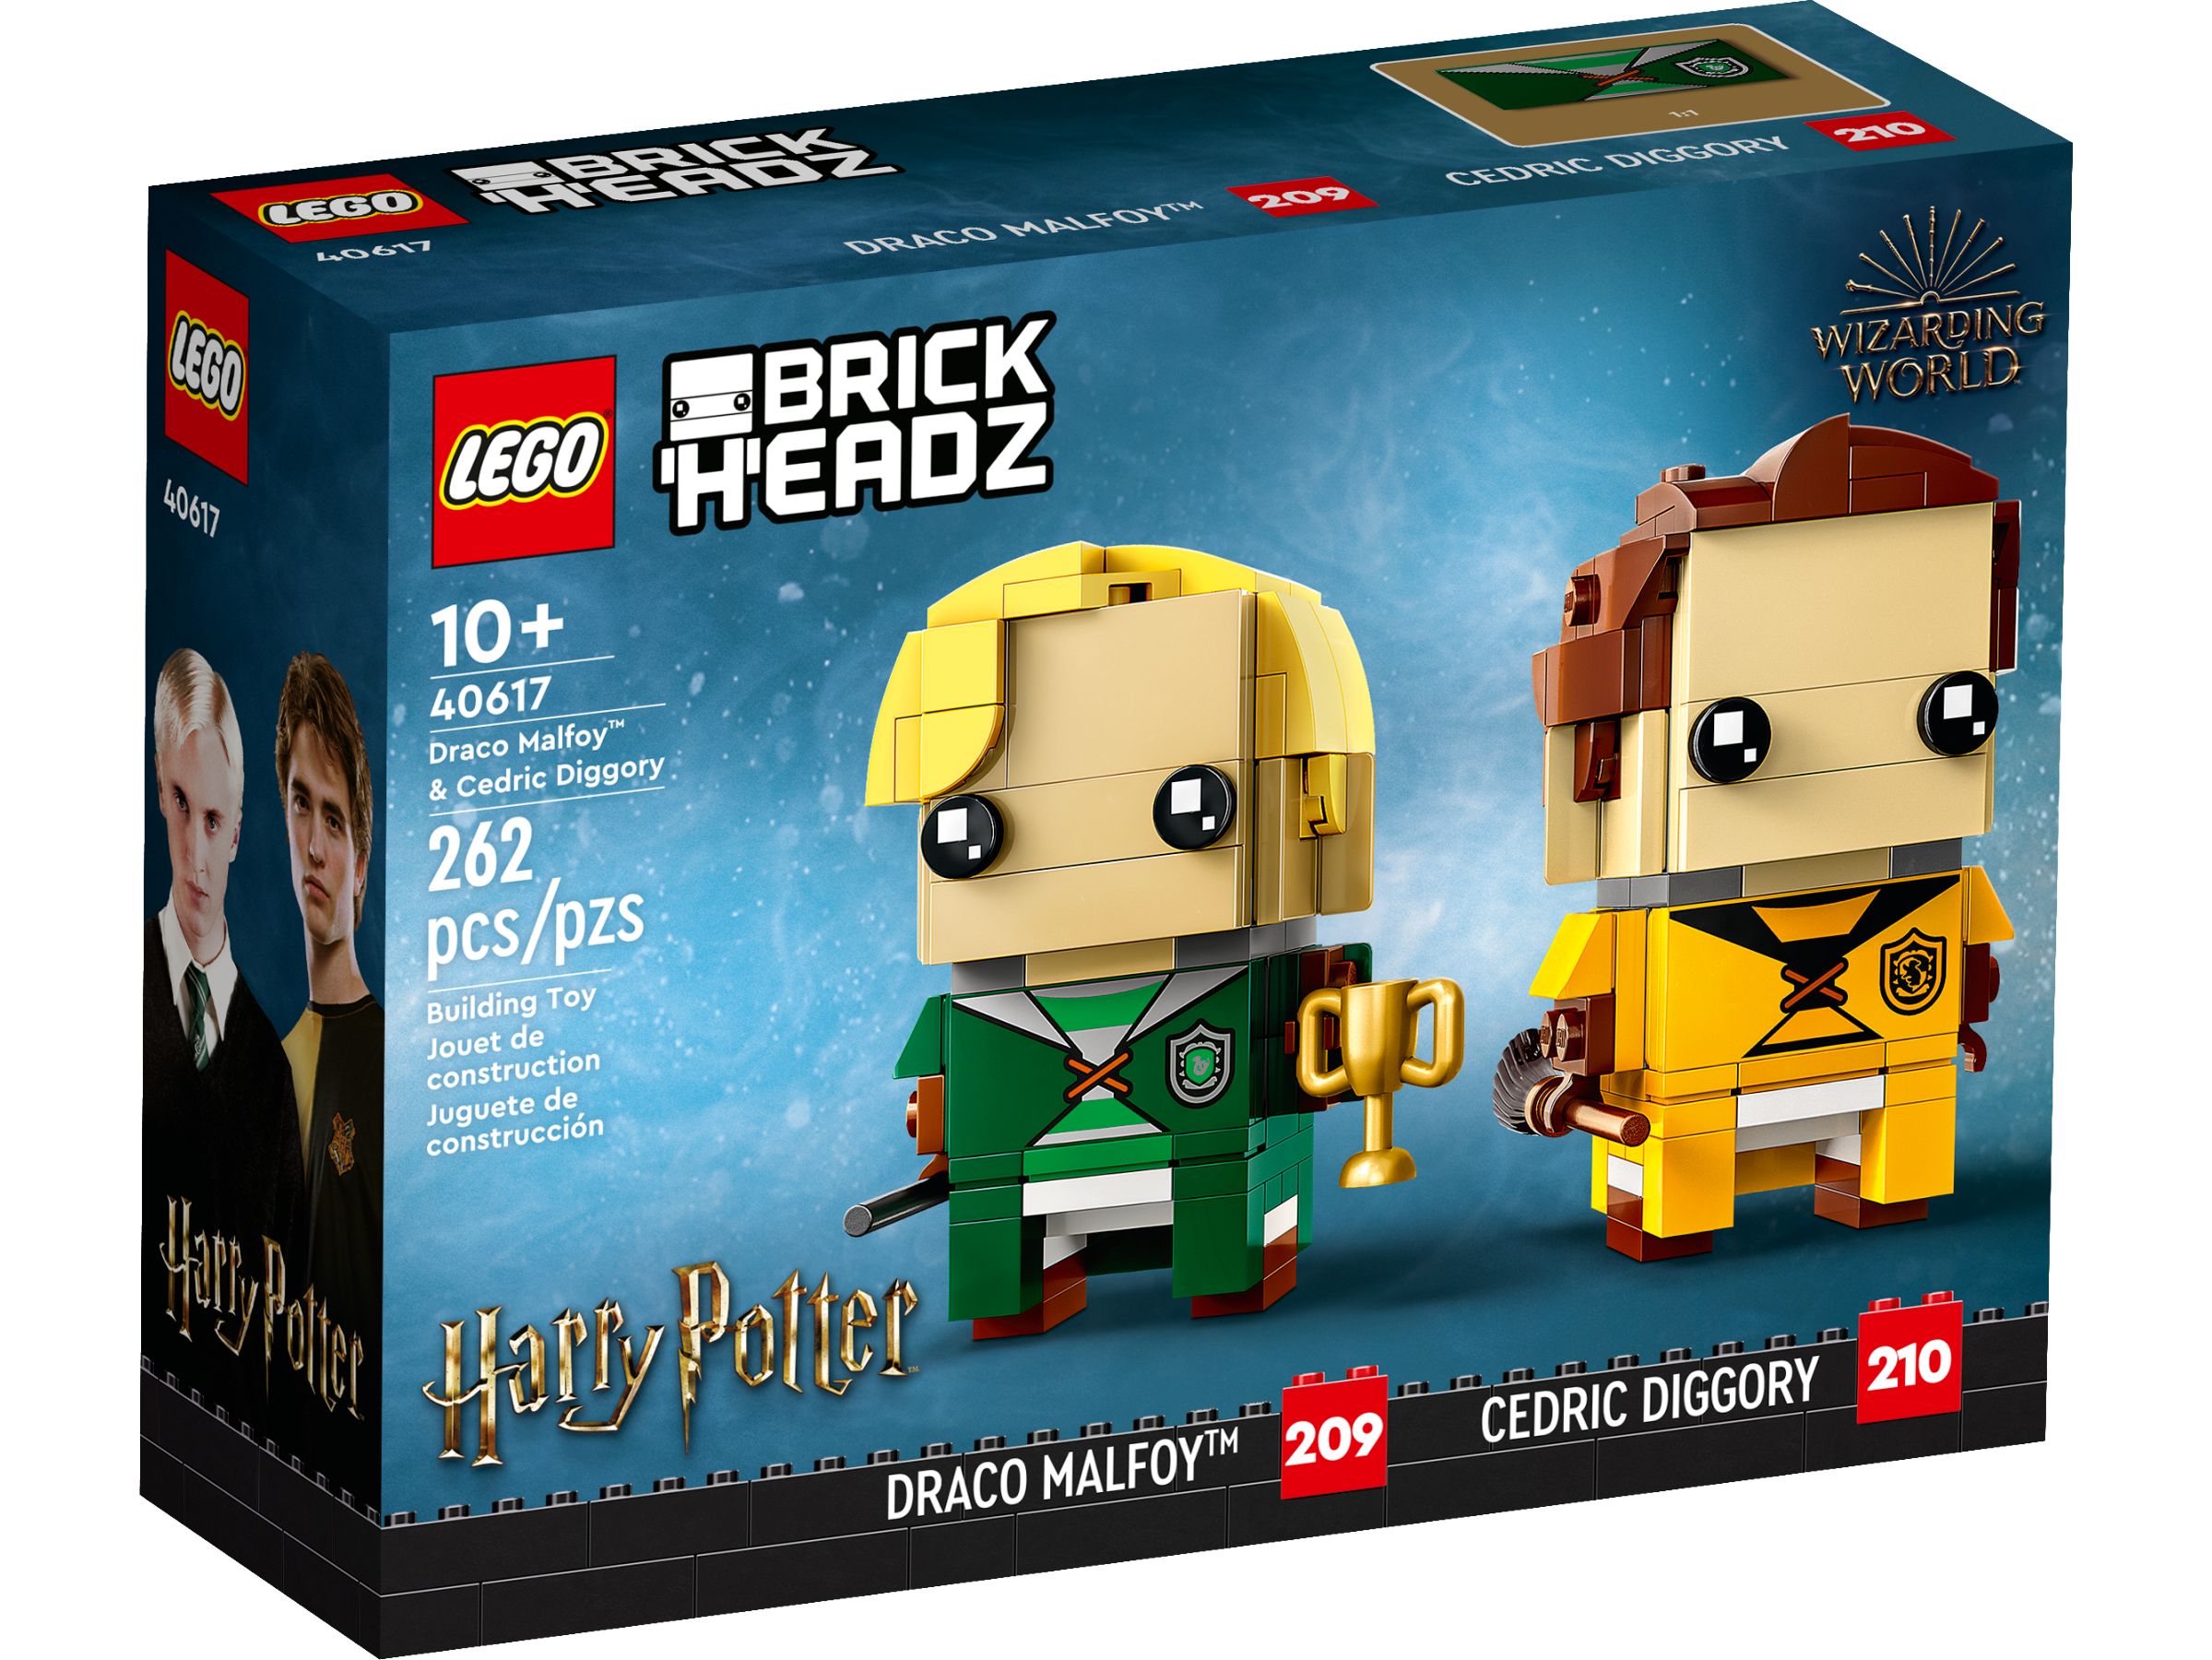 LEGO BrickHeadz 40617 Draco Malfoy™ & Cedric Diggory LEGO_40617_Box1_v39.jpg